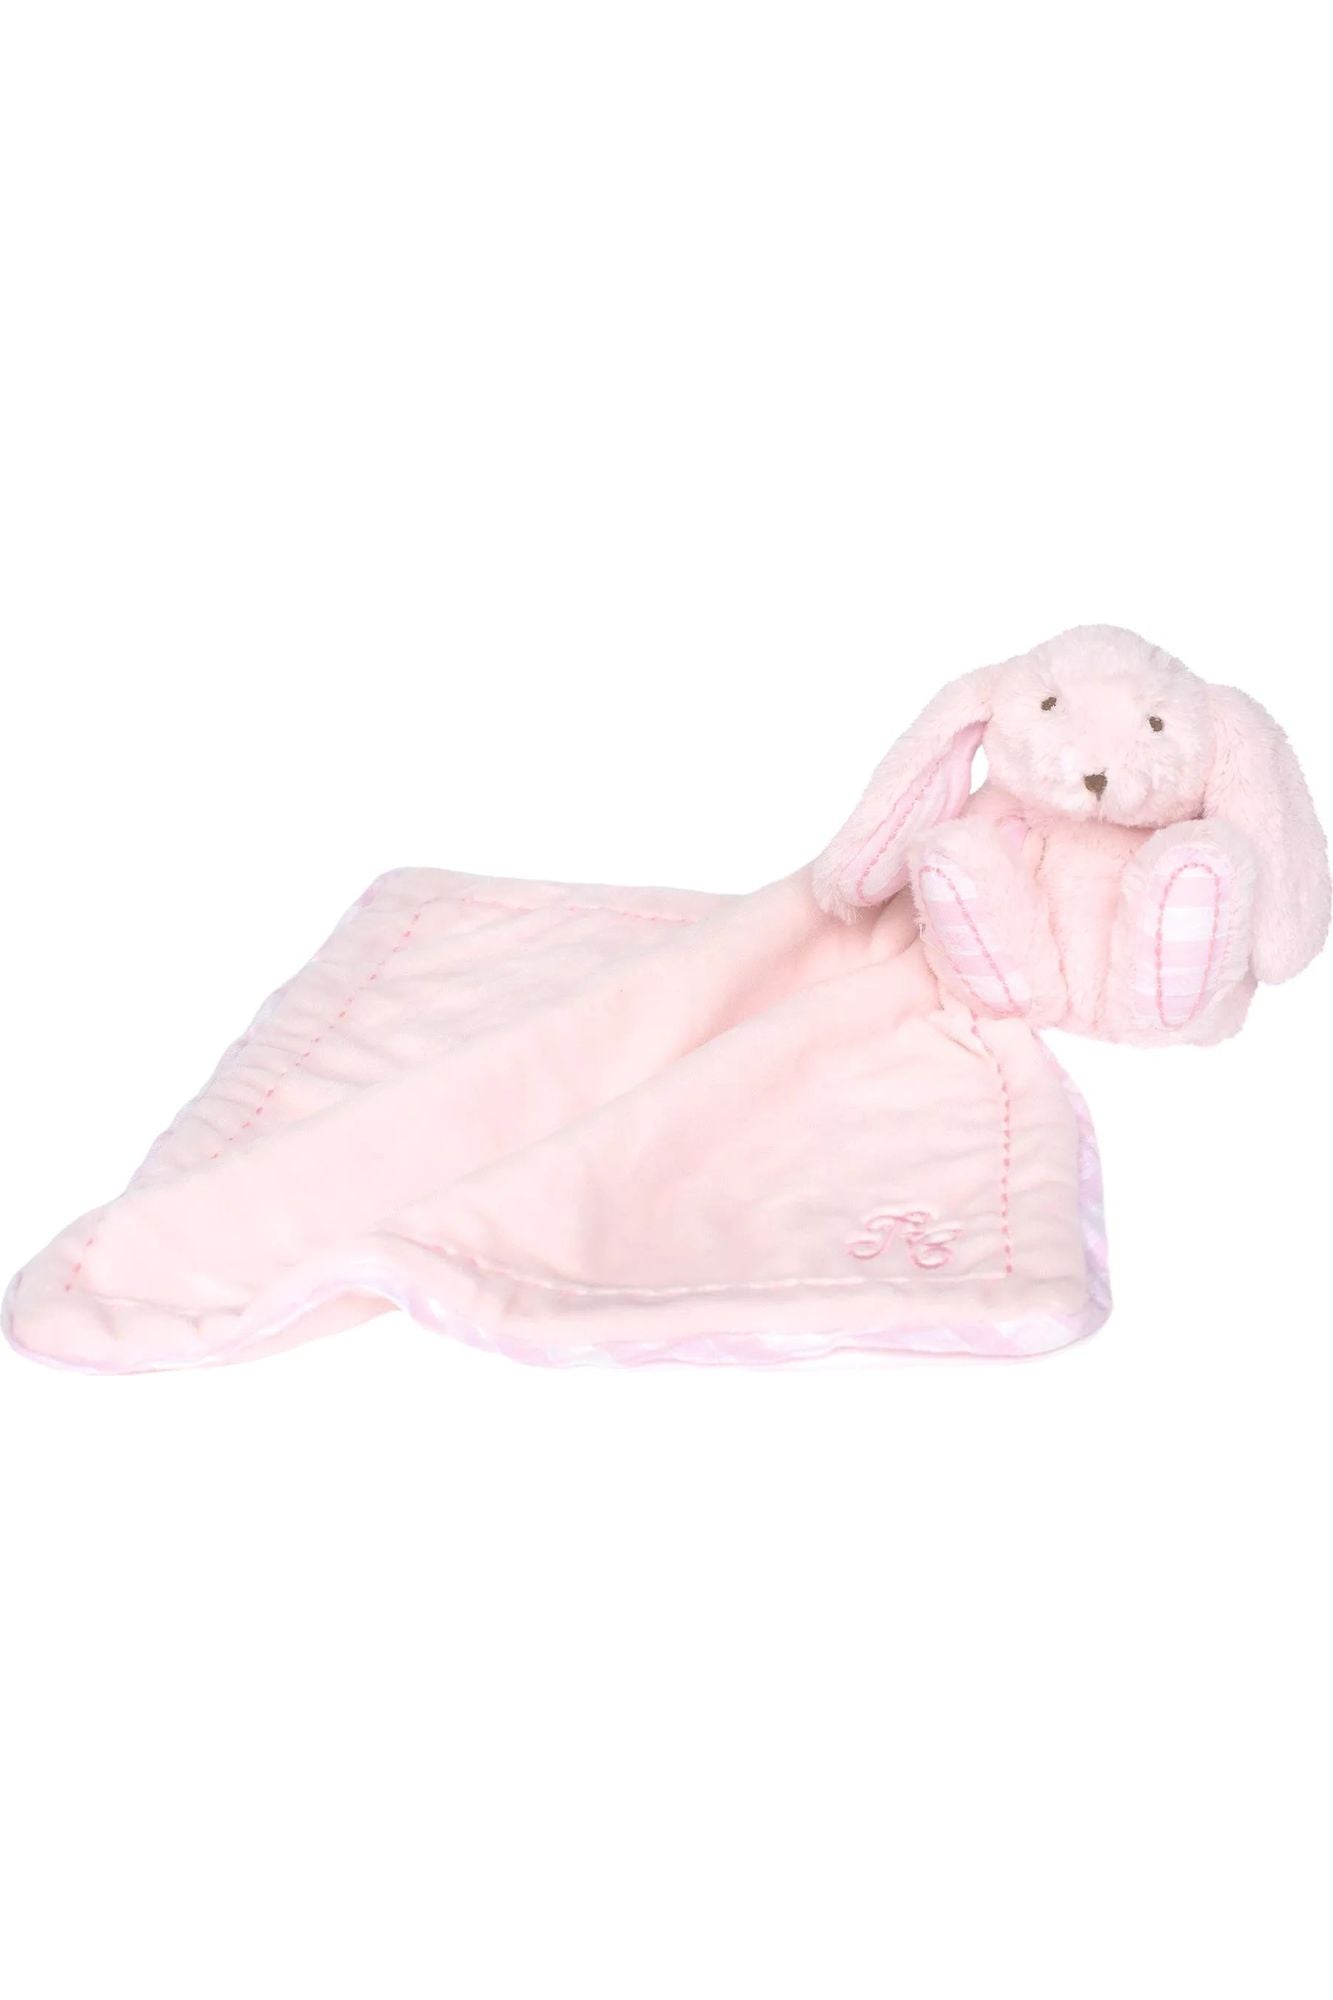 Augustin the Rabbit Comforter - Pale Pink - GEMINI ATELIER